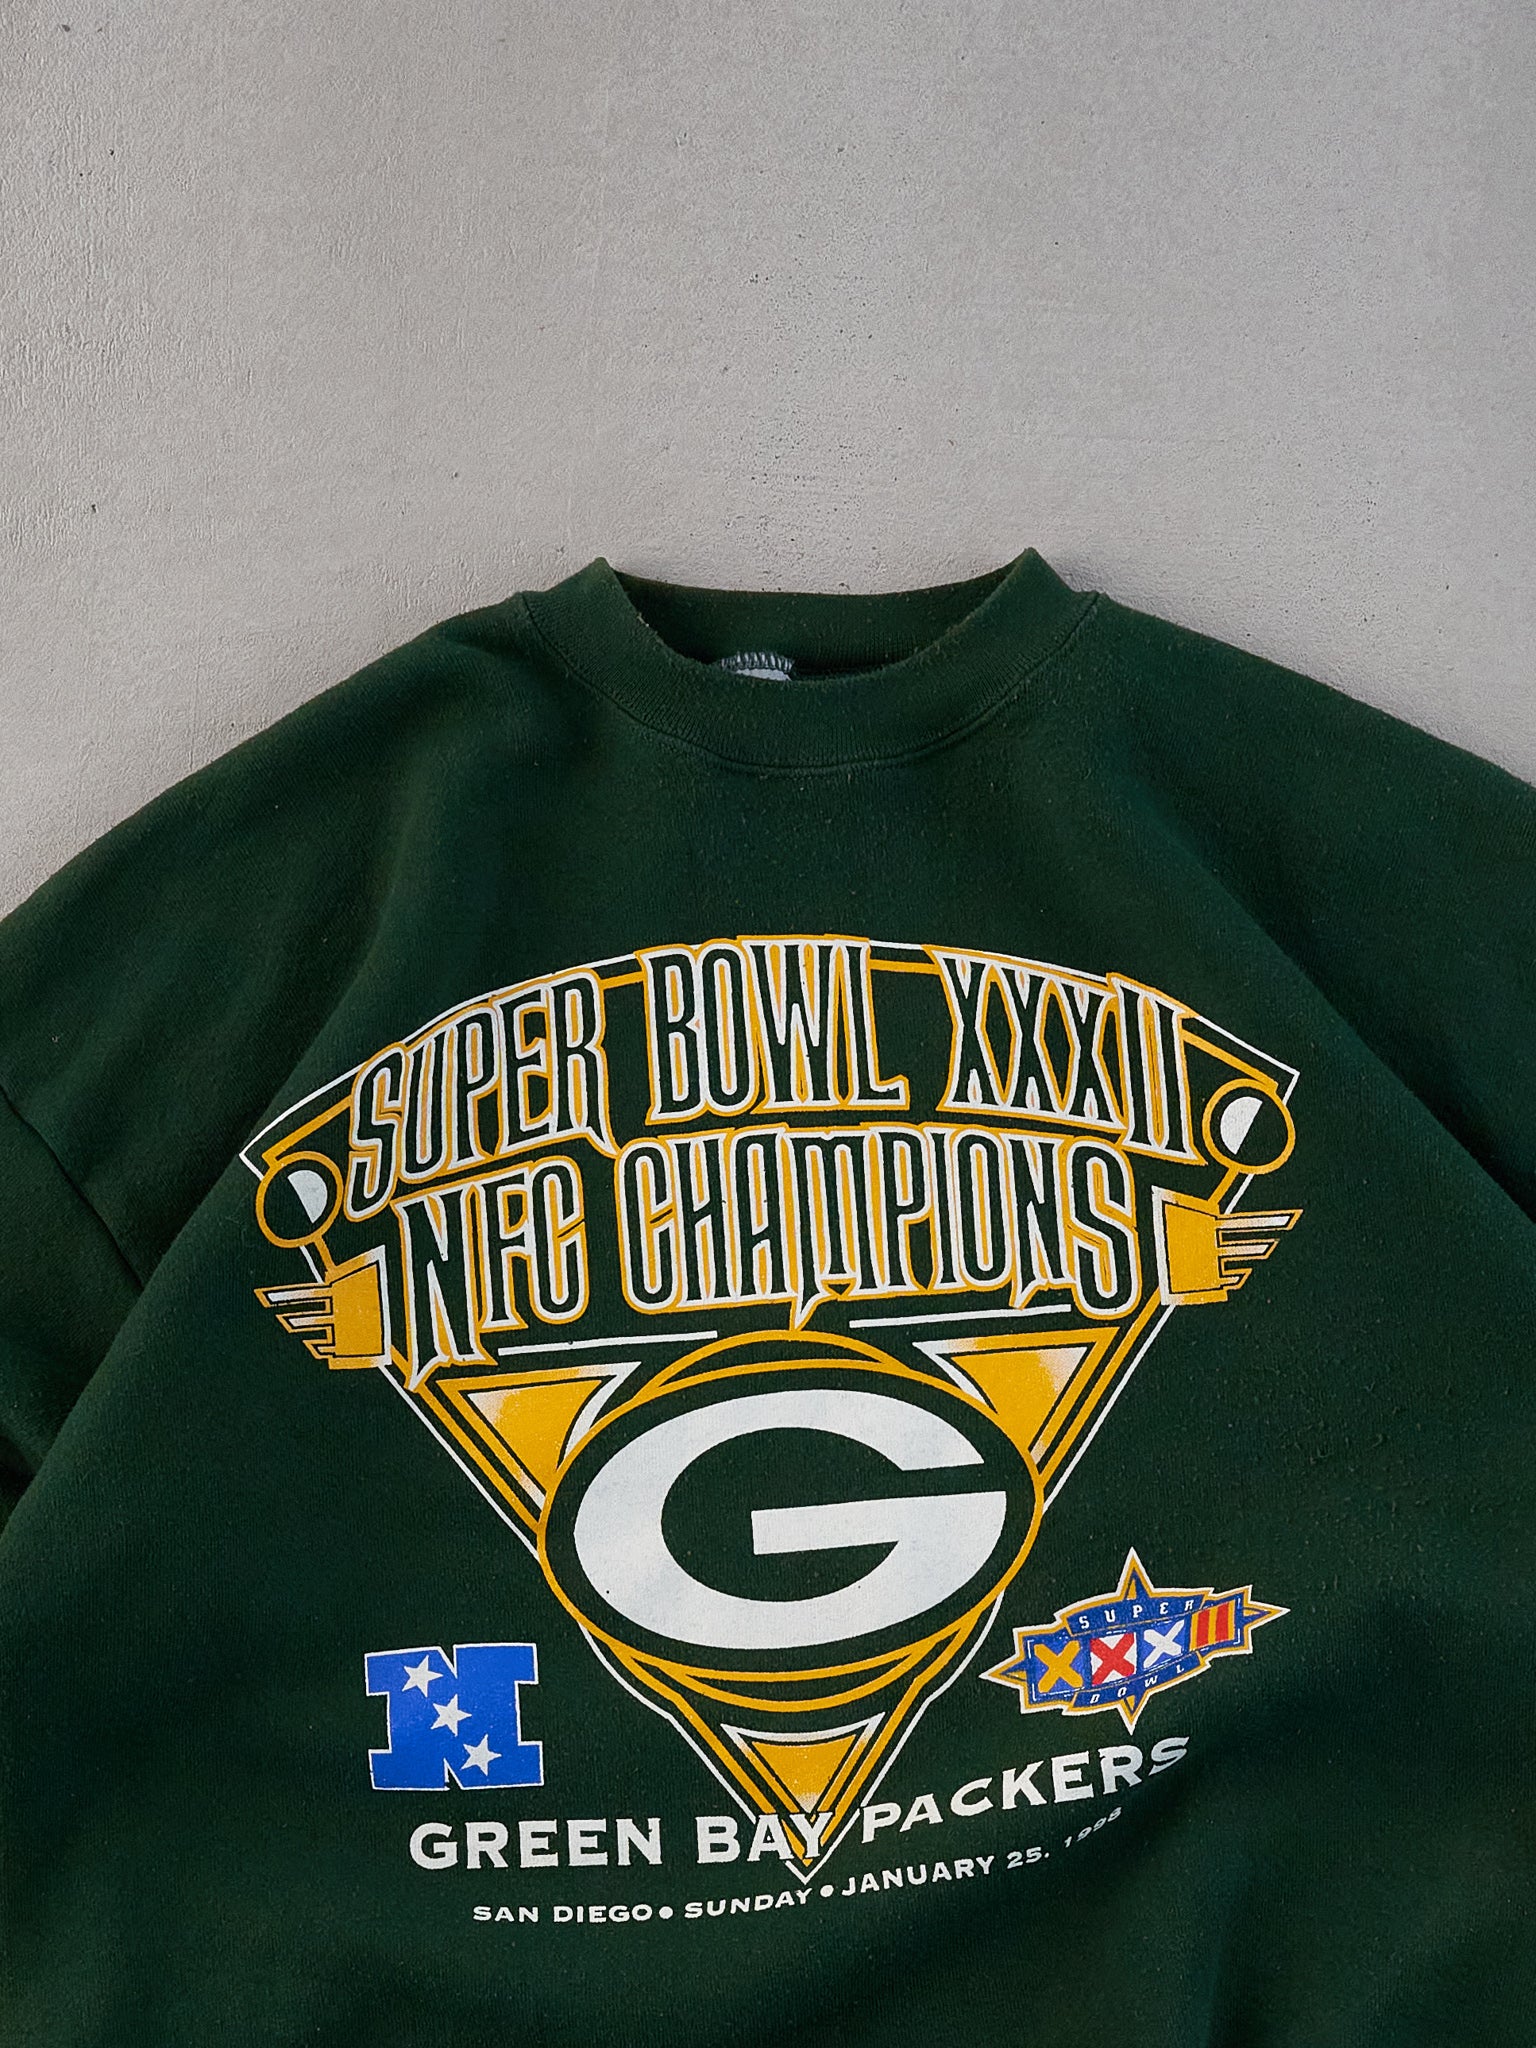 Vintage 98' Green Green Bay Packers Champions Crewneck (L)